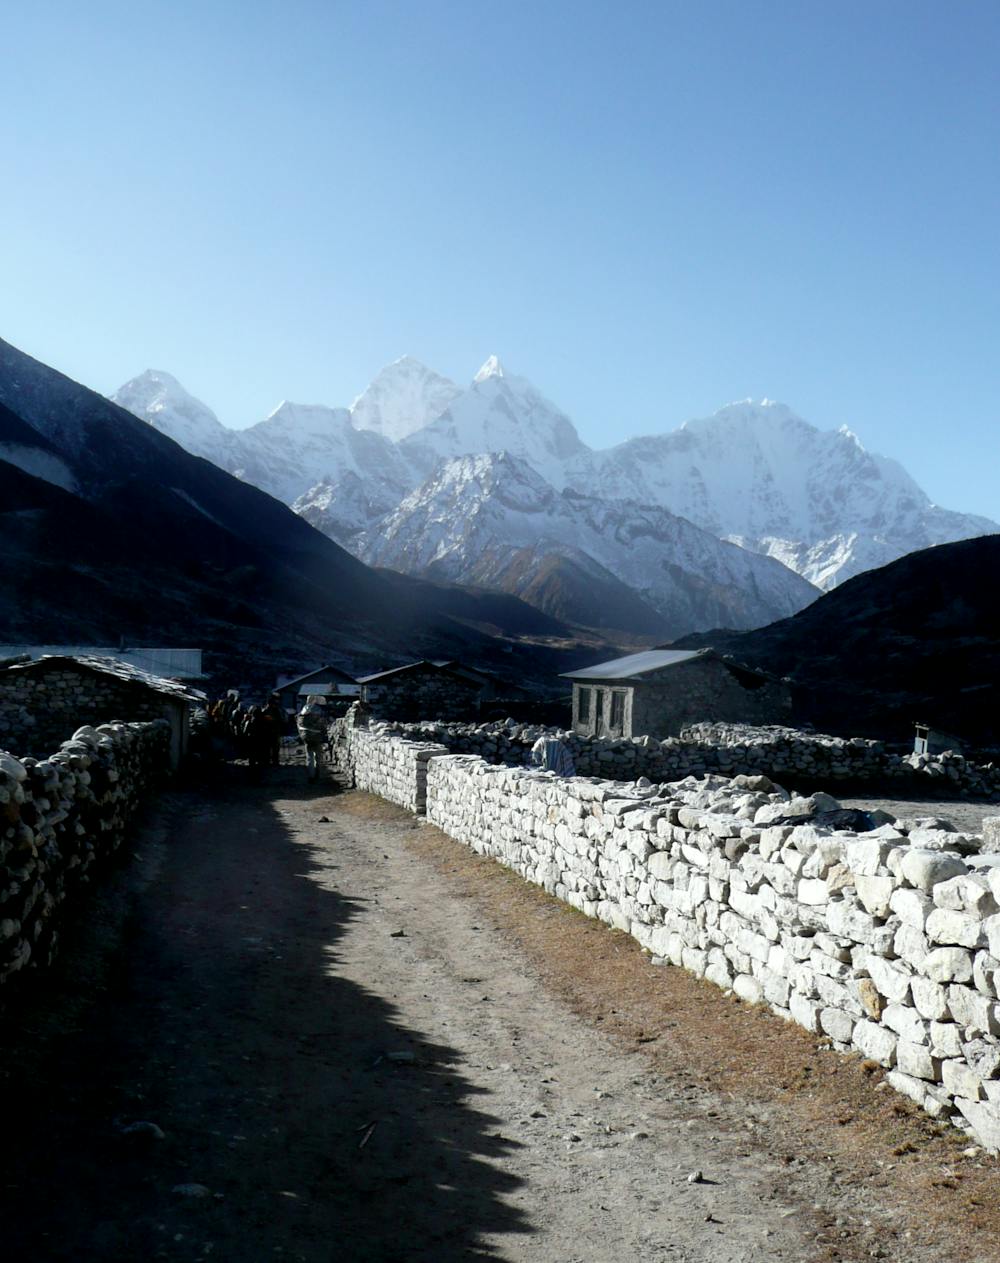 Typically wonderful Himalayan views